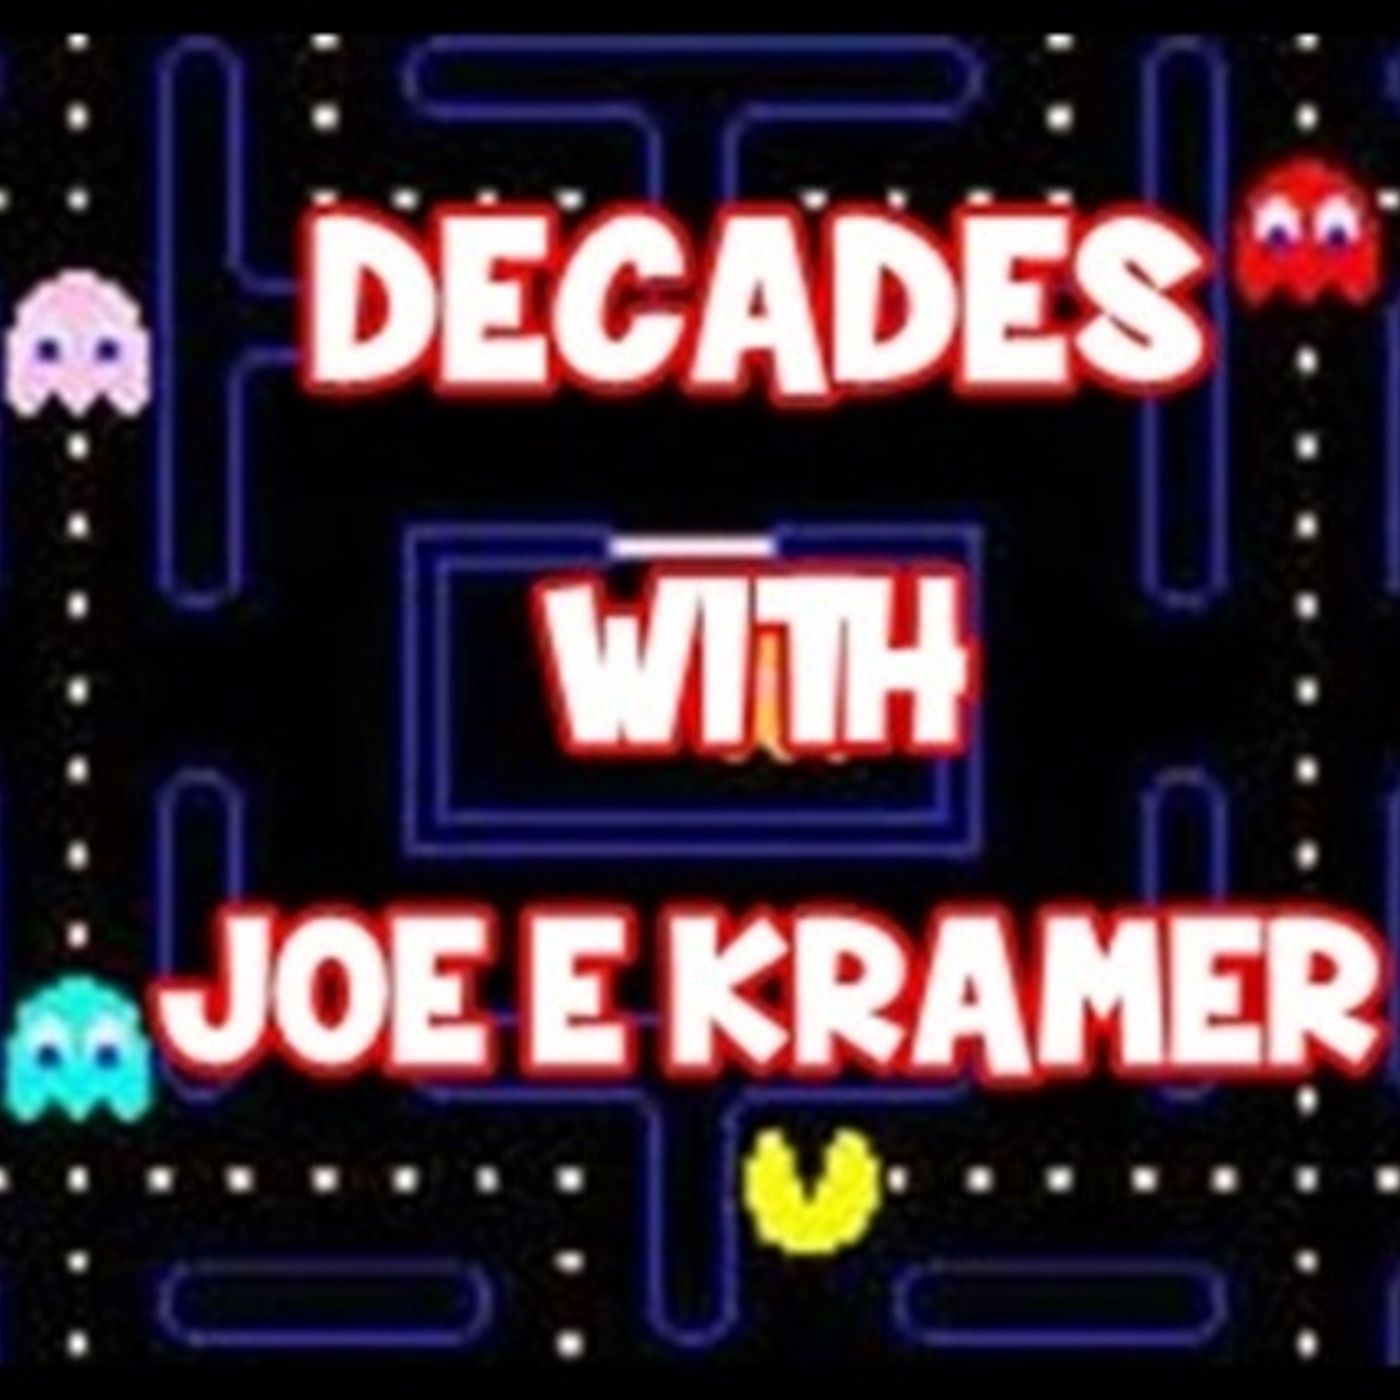 Decades with Joe E. Kramer